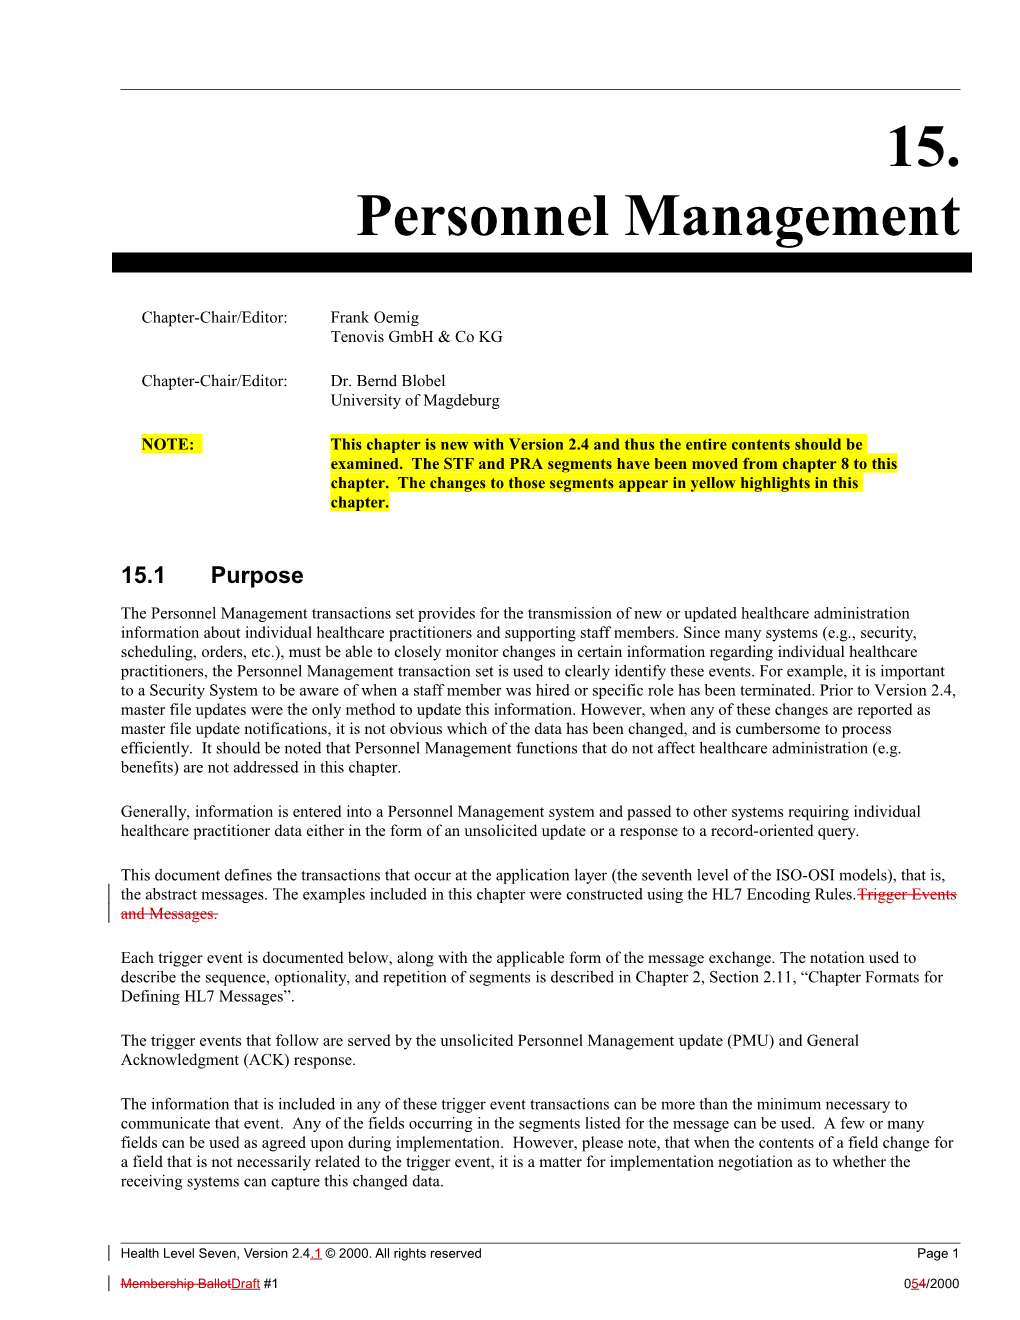 Chapter 15: Personnel Management